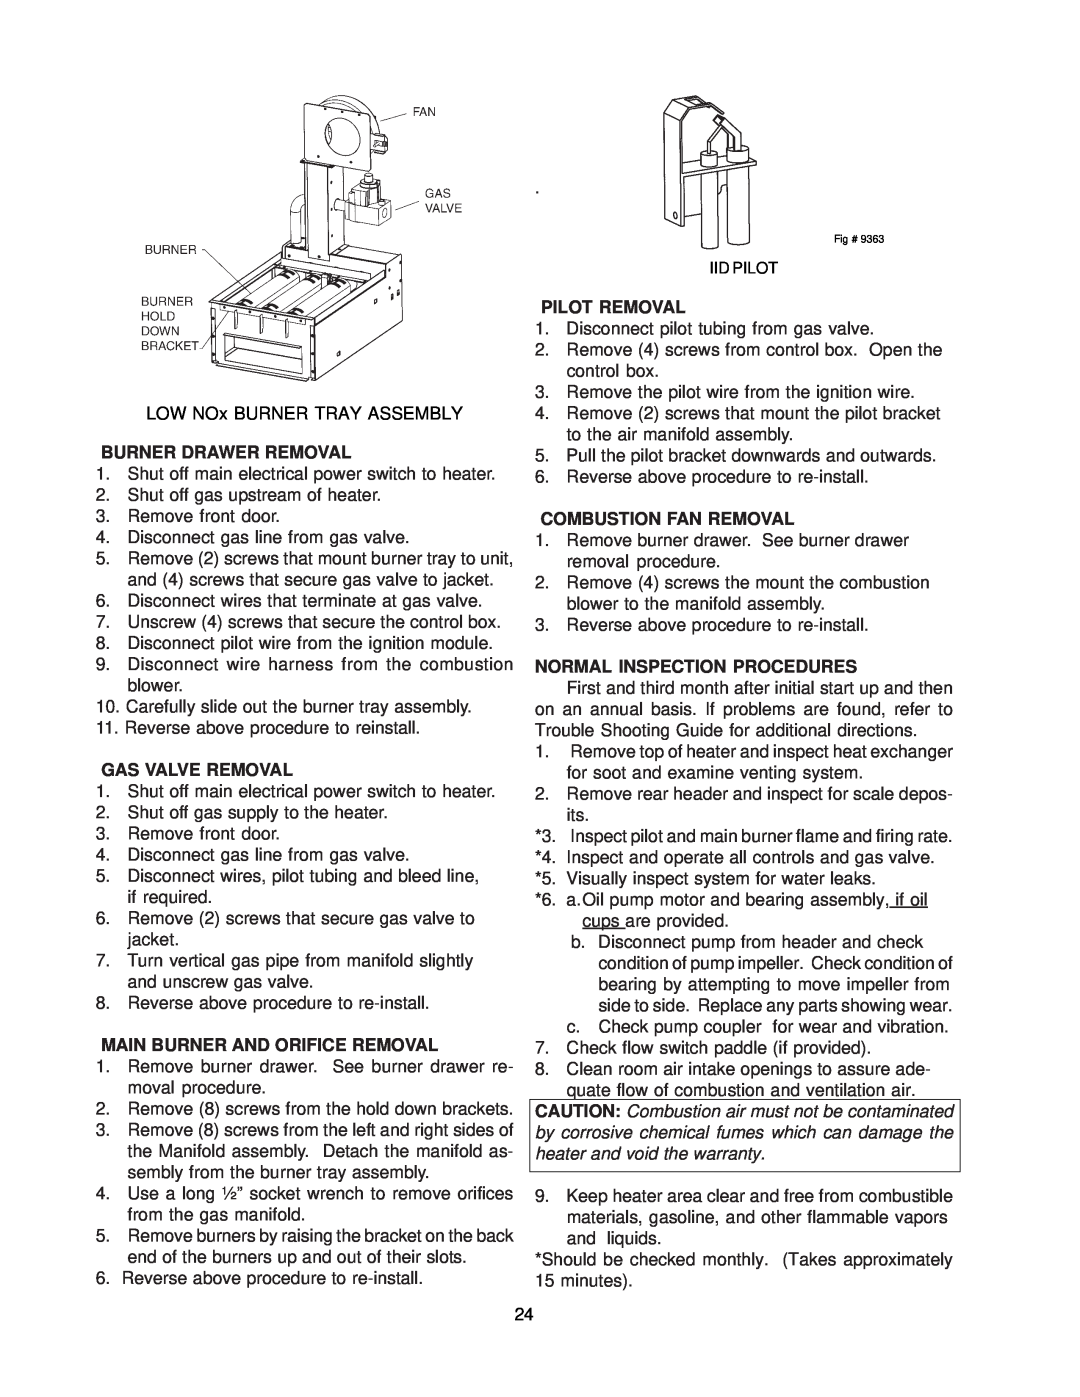 Raypak 260-401 manual Burner Drawer Removal, Gas Valve Removal, Main Burner And Orifice Removal, Pilot Removal 